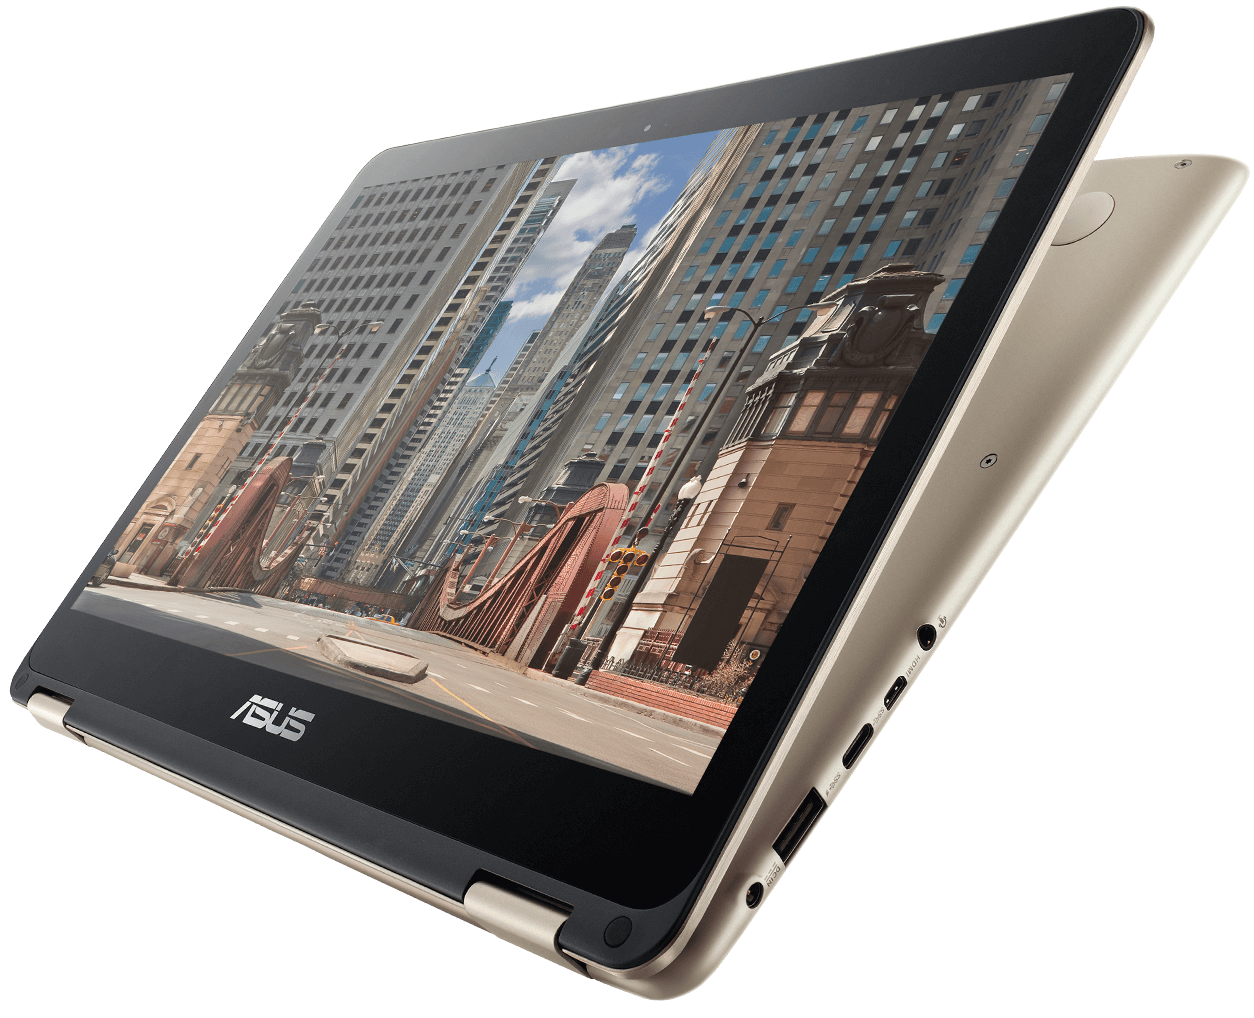 ASUS Zenbook Flip UX360｜Laptops For Home｜ASUS USA